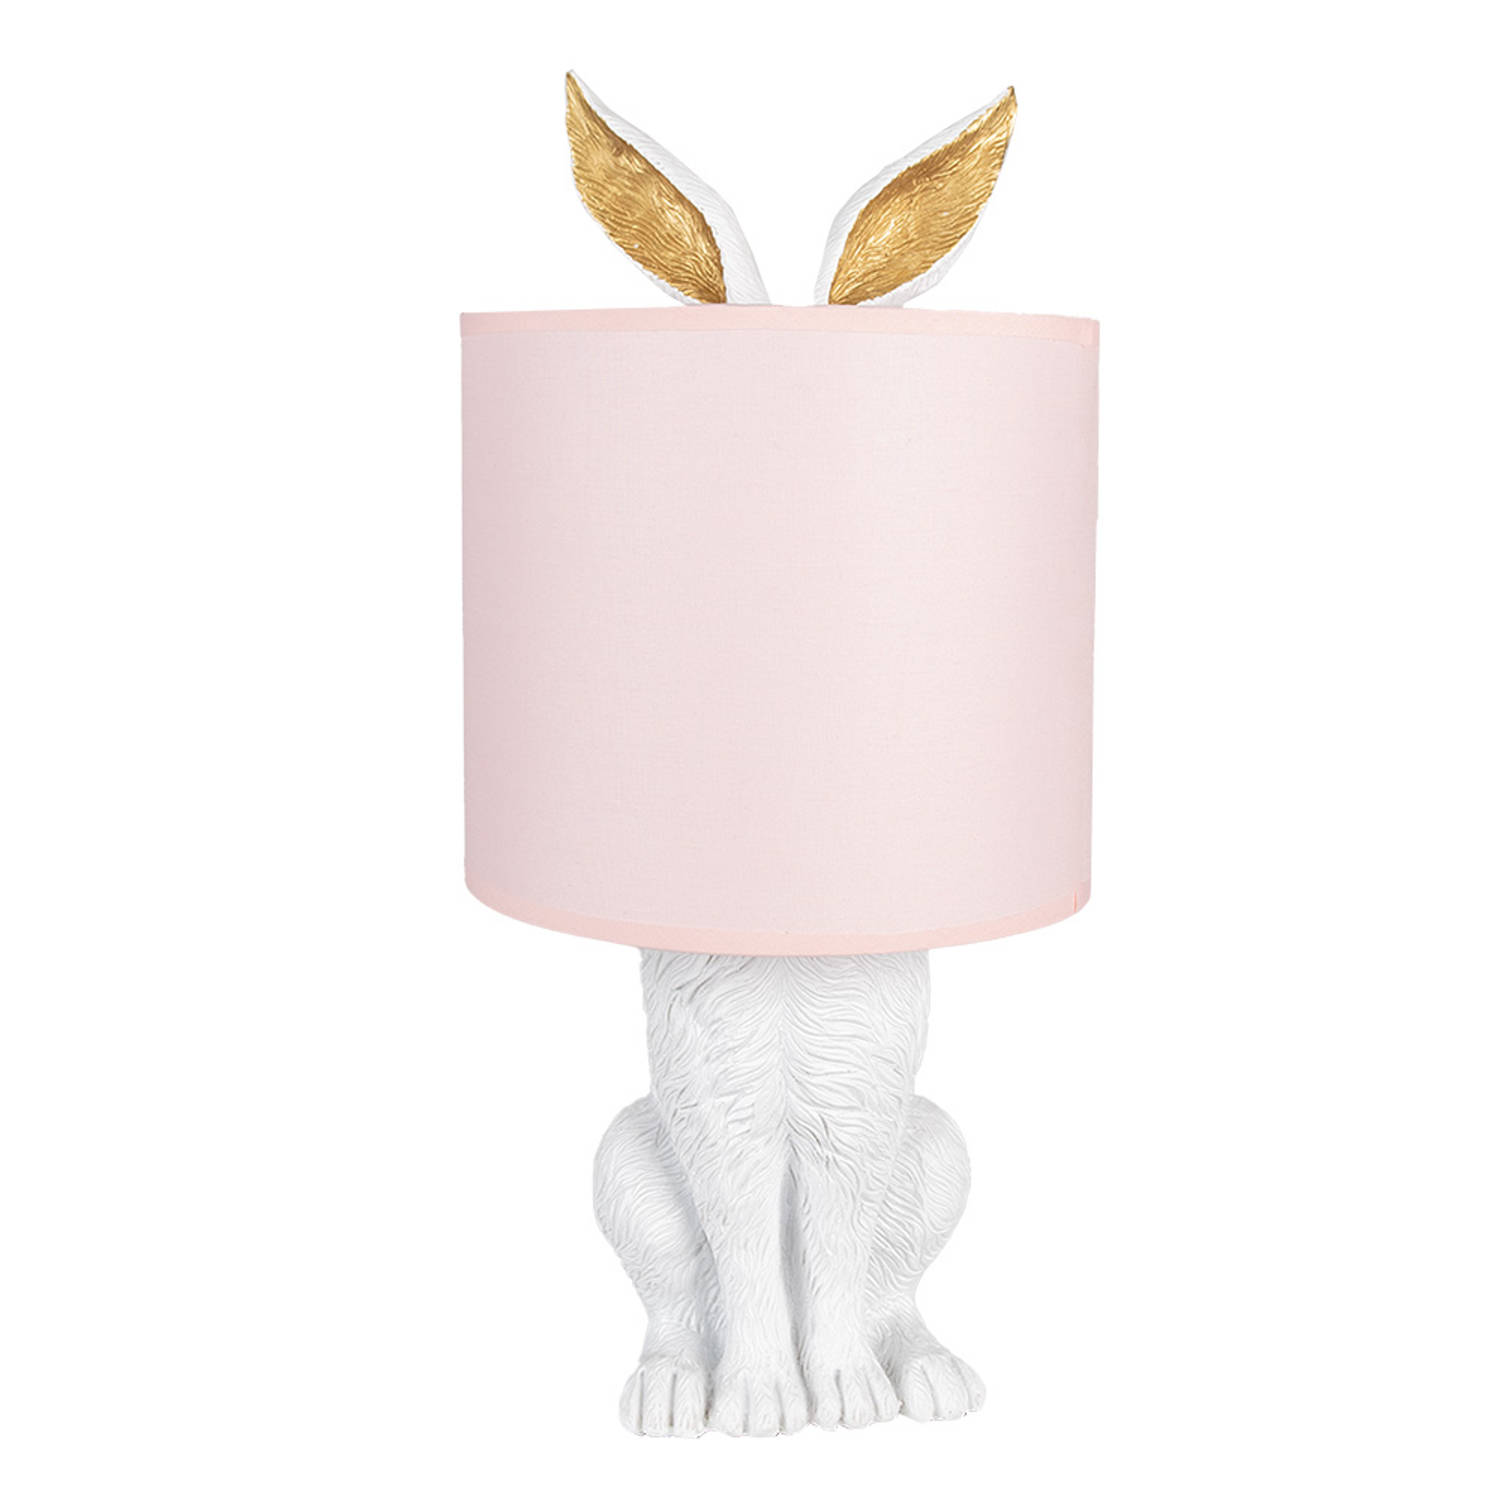 Haes Deco Tafellamp City Jungle Konijn In De Lamp, Ø 20x43 Cm Wit-roze Bureaulamp, Sfeerlamp, Nachtl